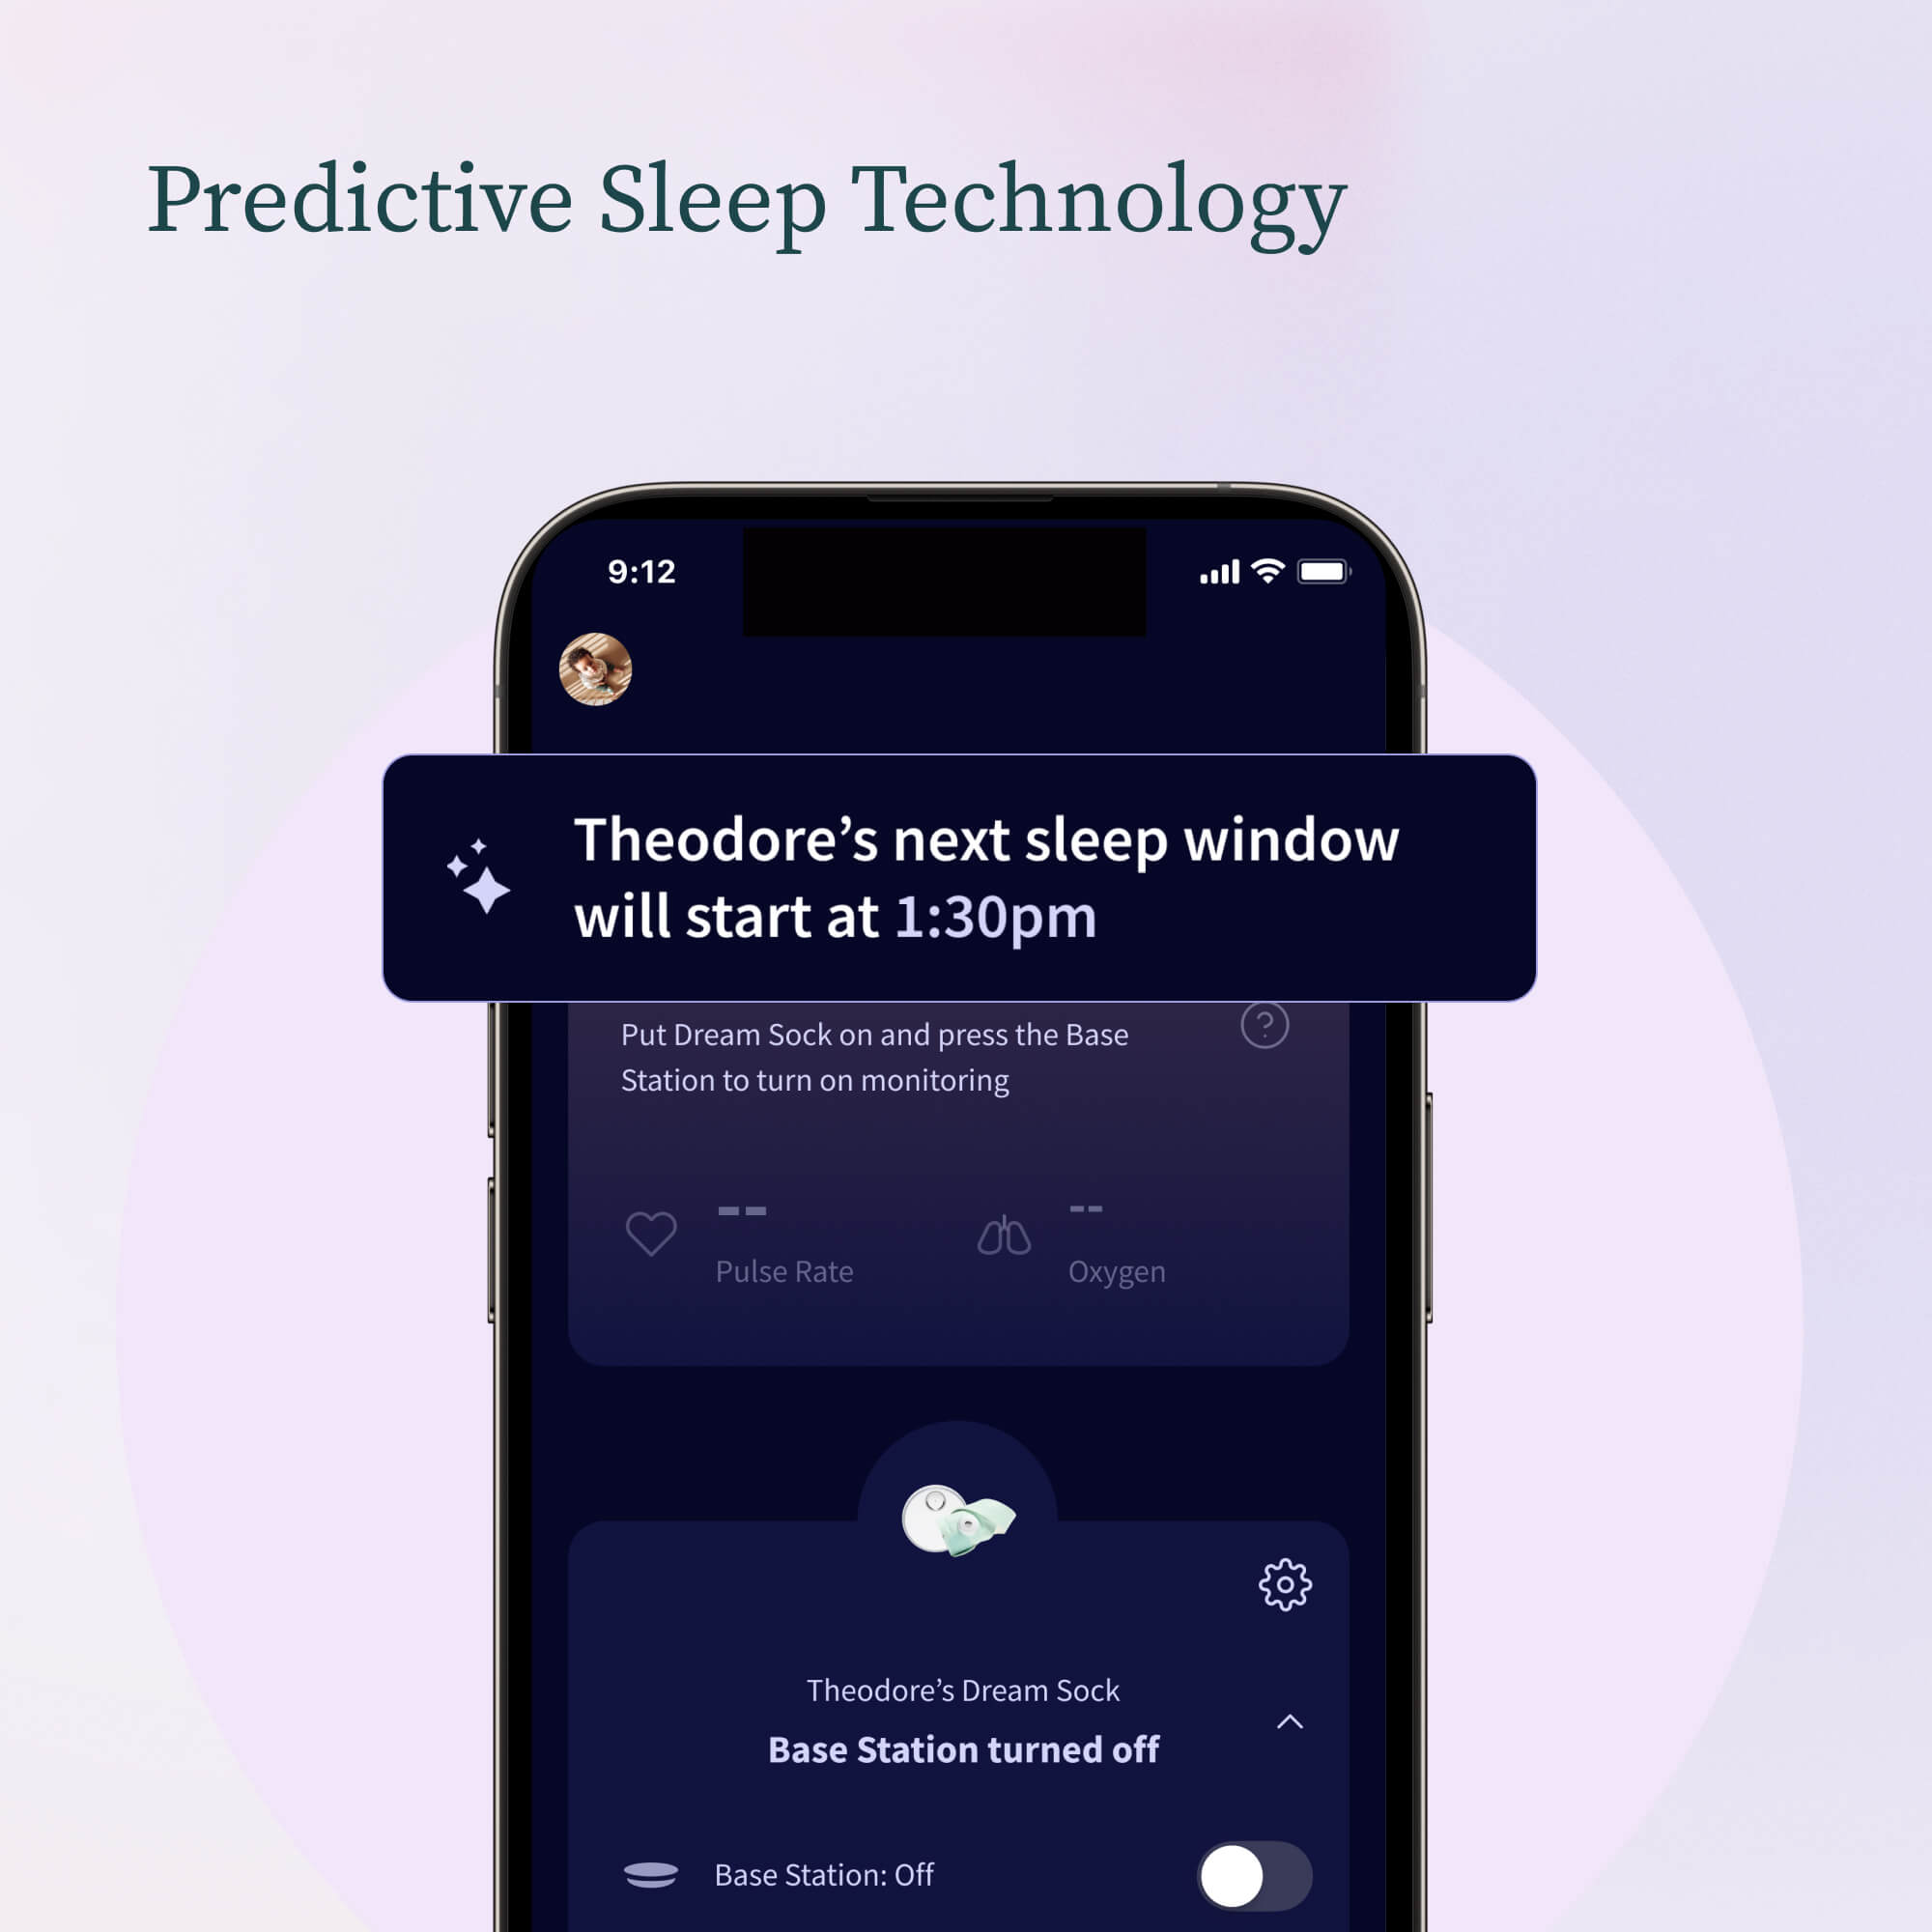 Predictive sleep technology